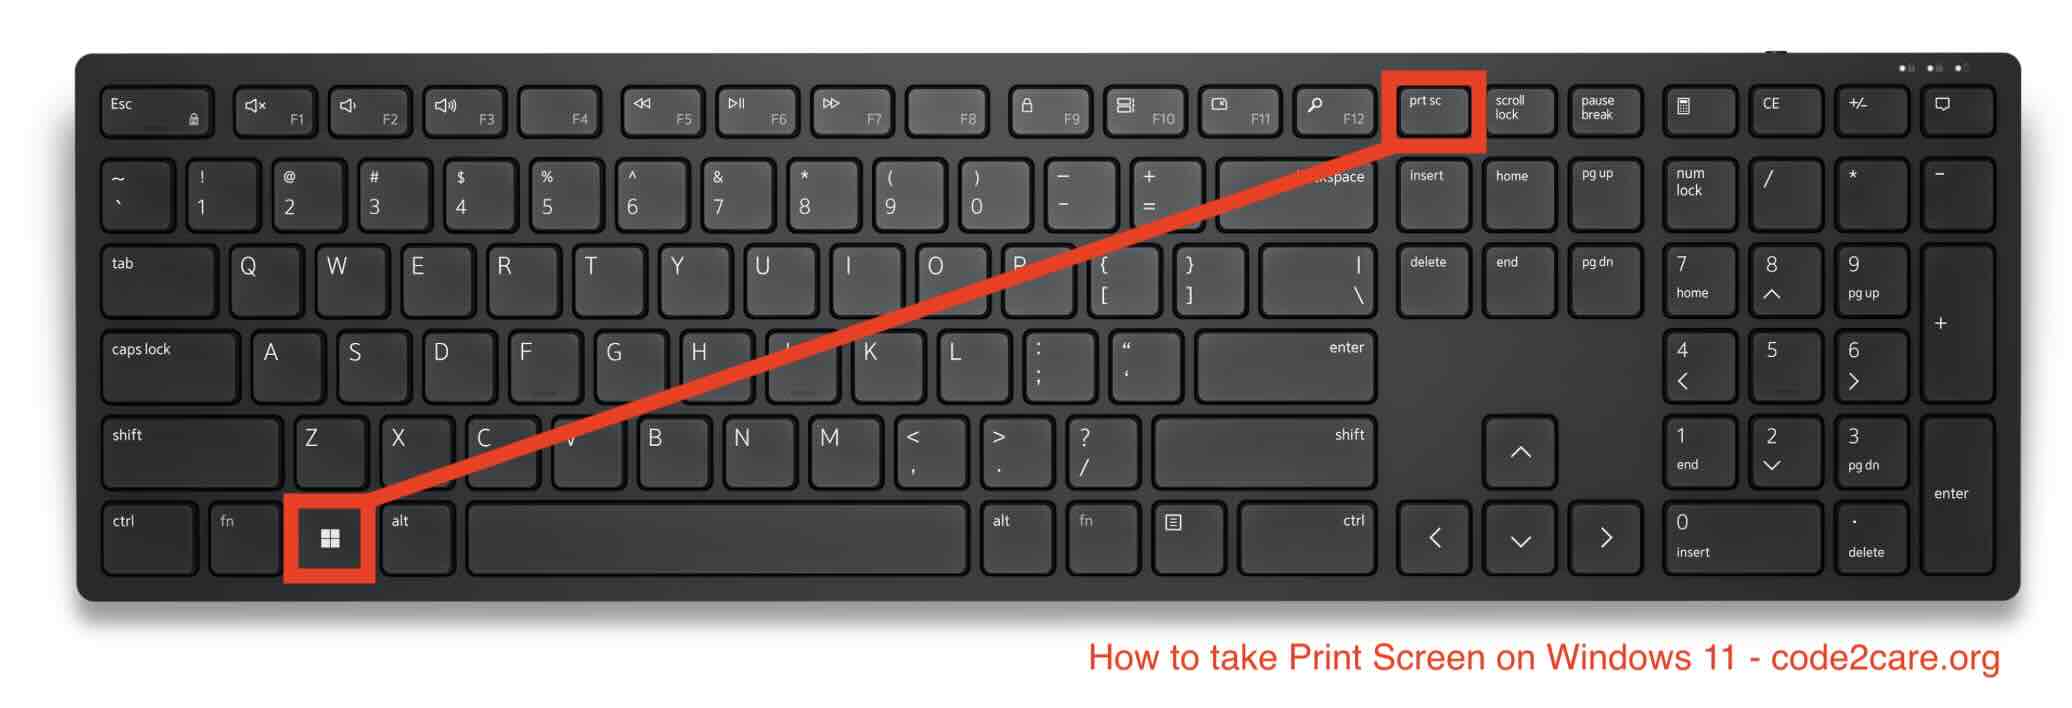 Keyboard Keys to take Print Screen on Windows 11